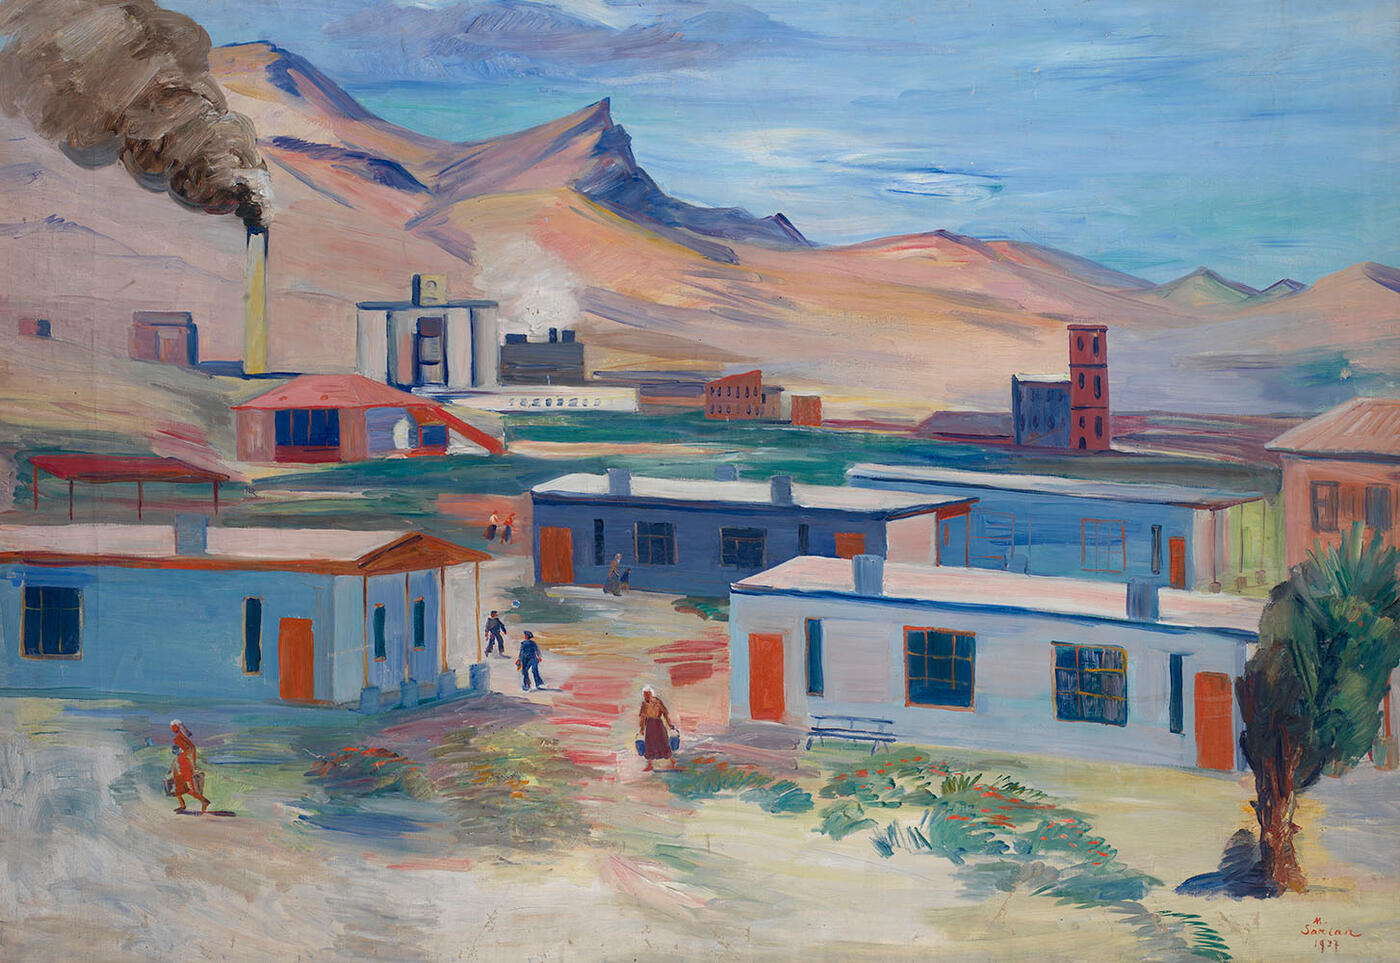 Worker's Settlement and Concrete Plant, Davalu, Ararat Region